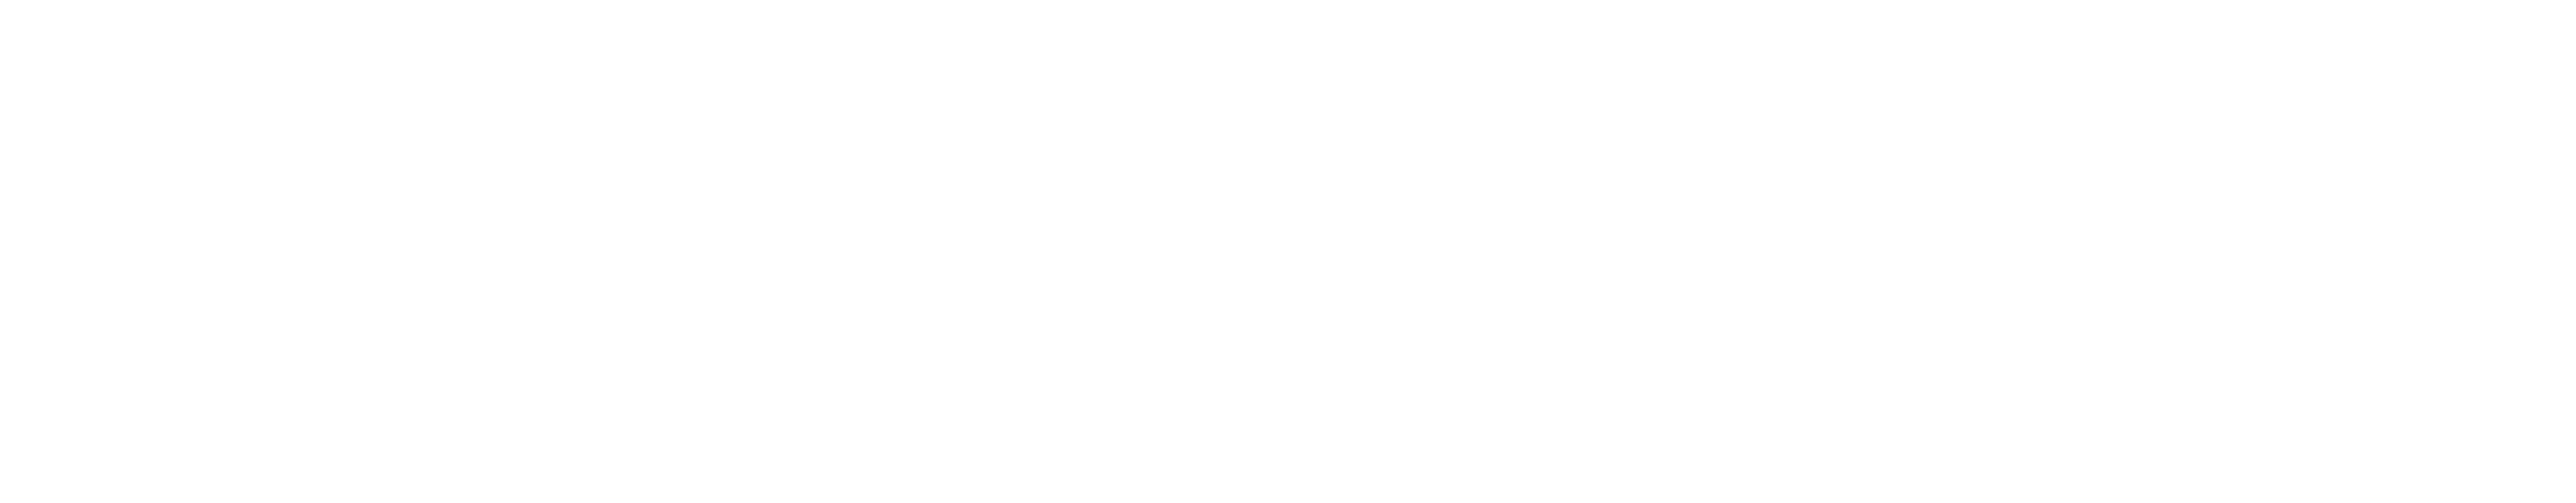 Infernal Affairs III logo